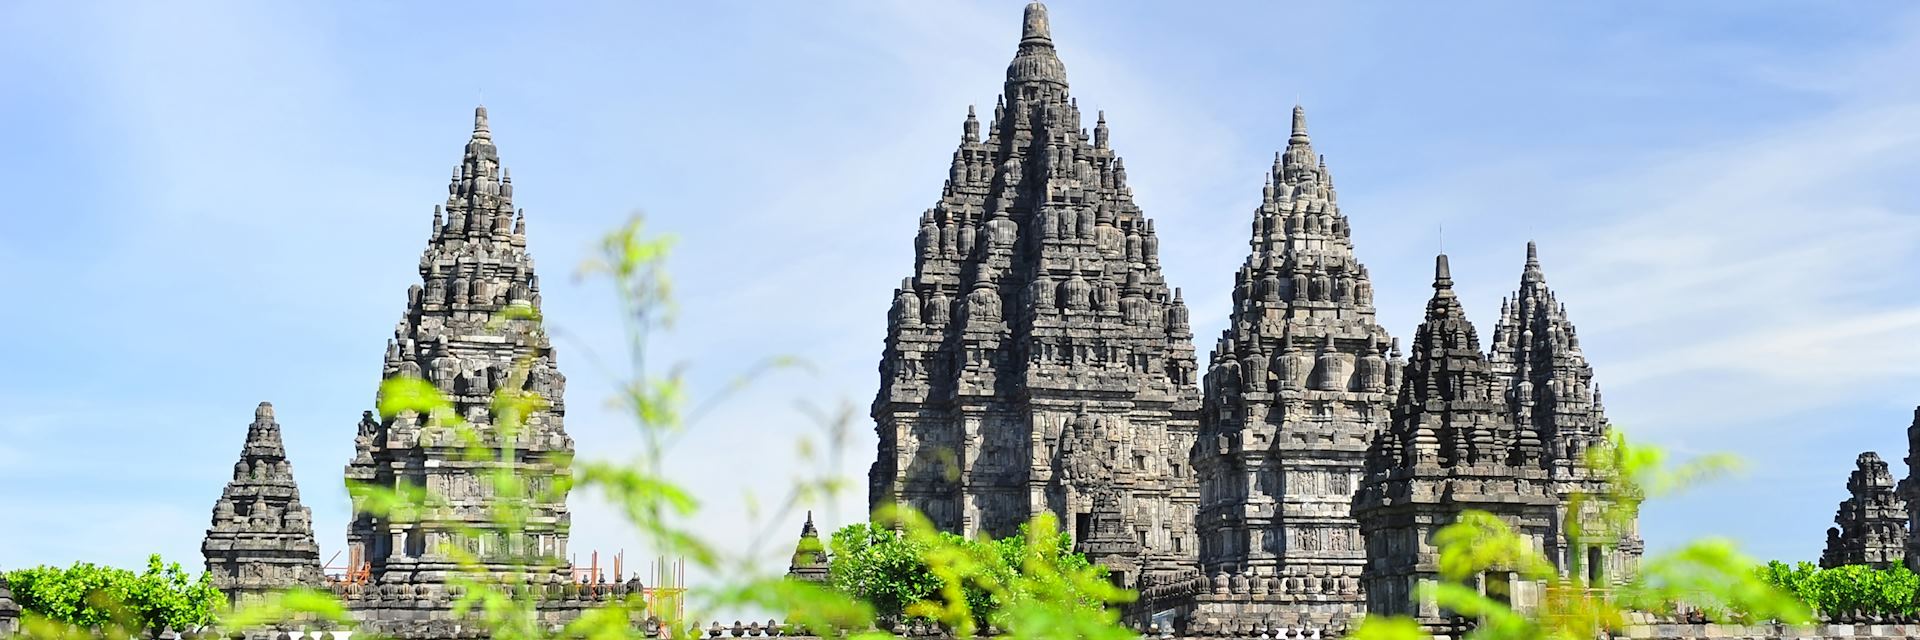 Prambanan temple complex